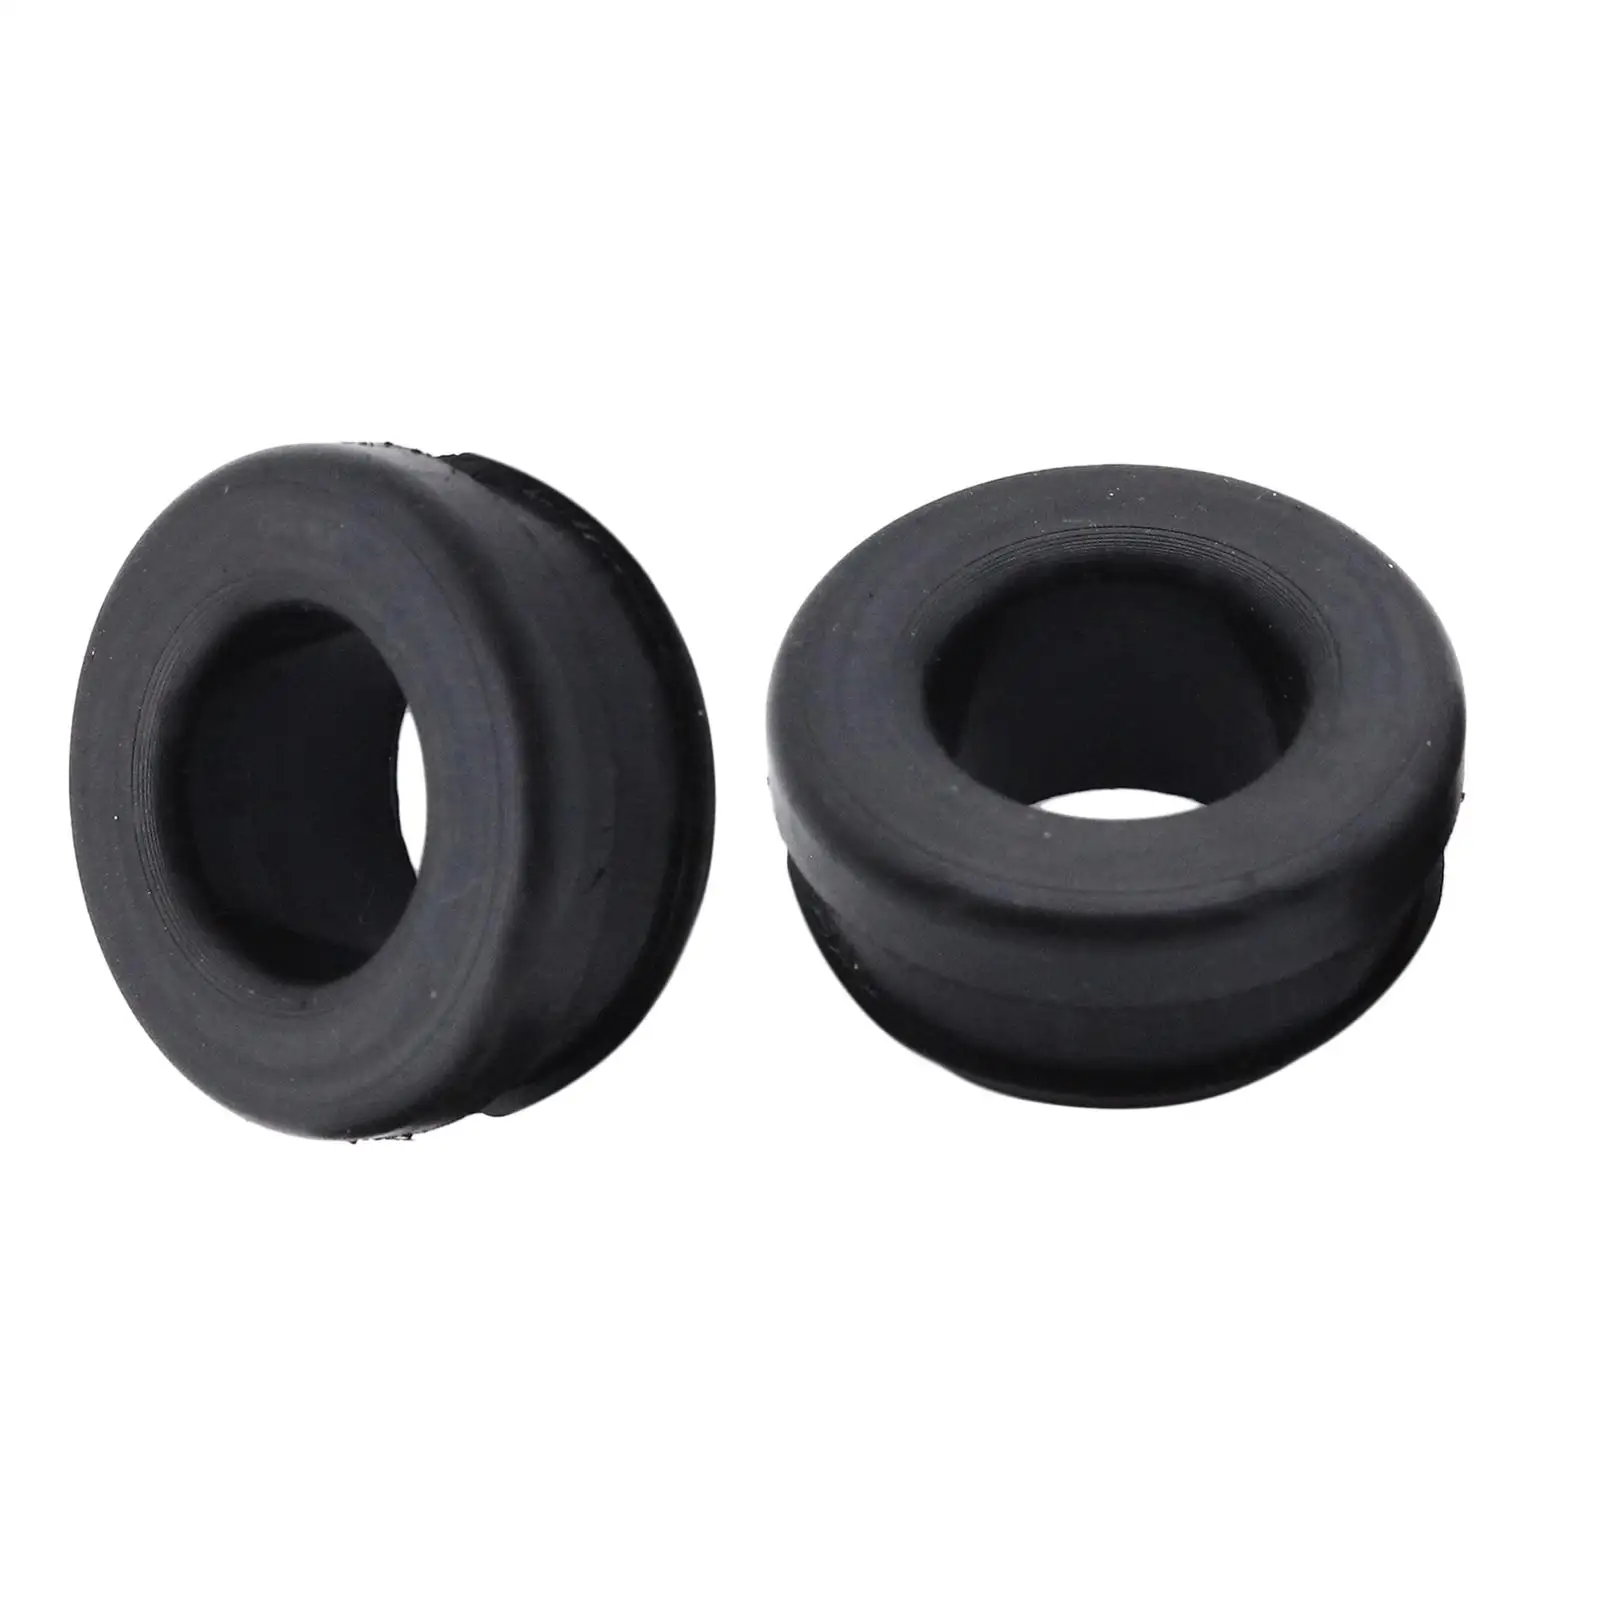 2 Pieces Rubber Pcv Breather Grommets Vehicle Parts Accessories Black 1